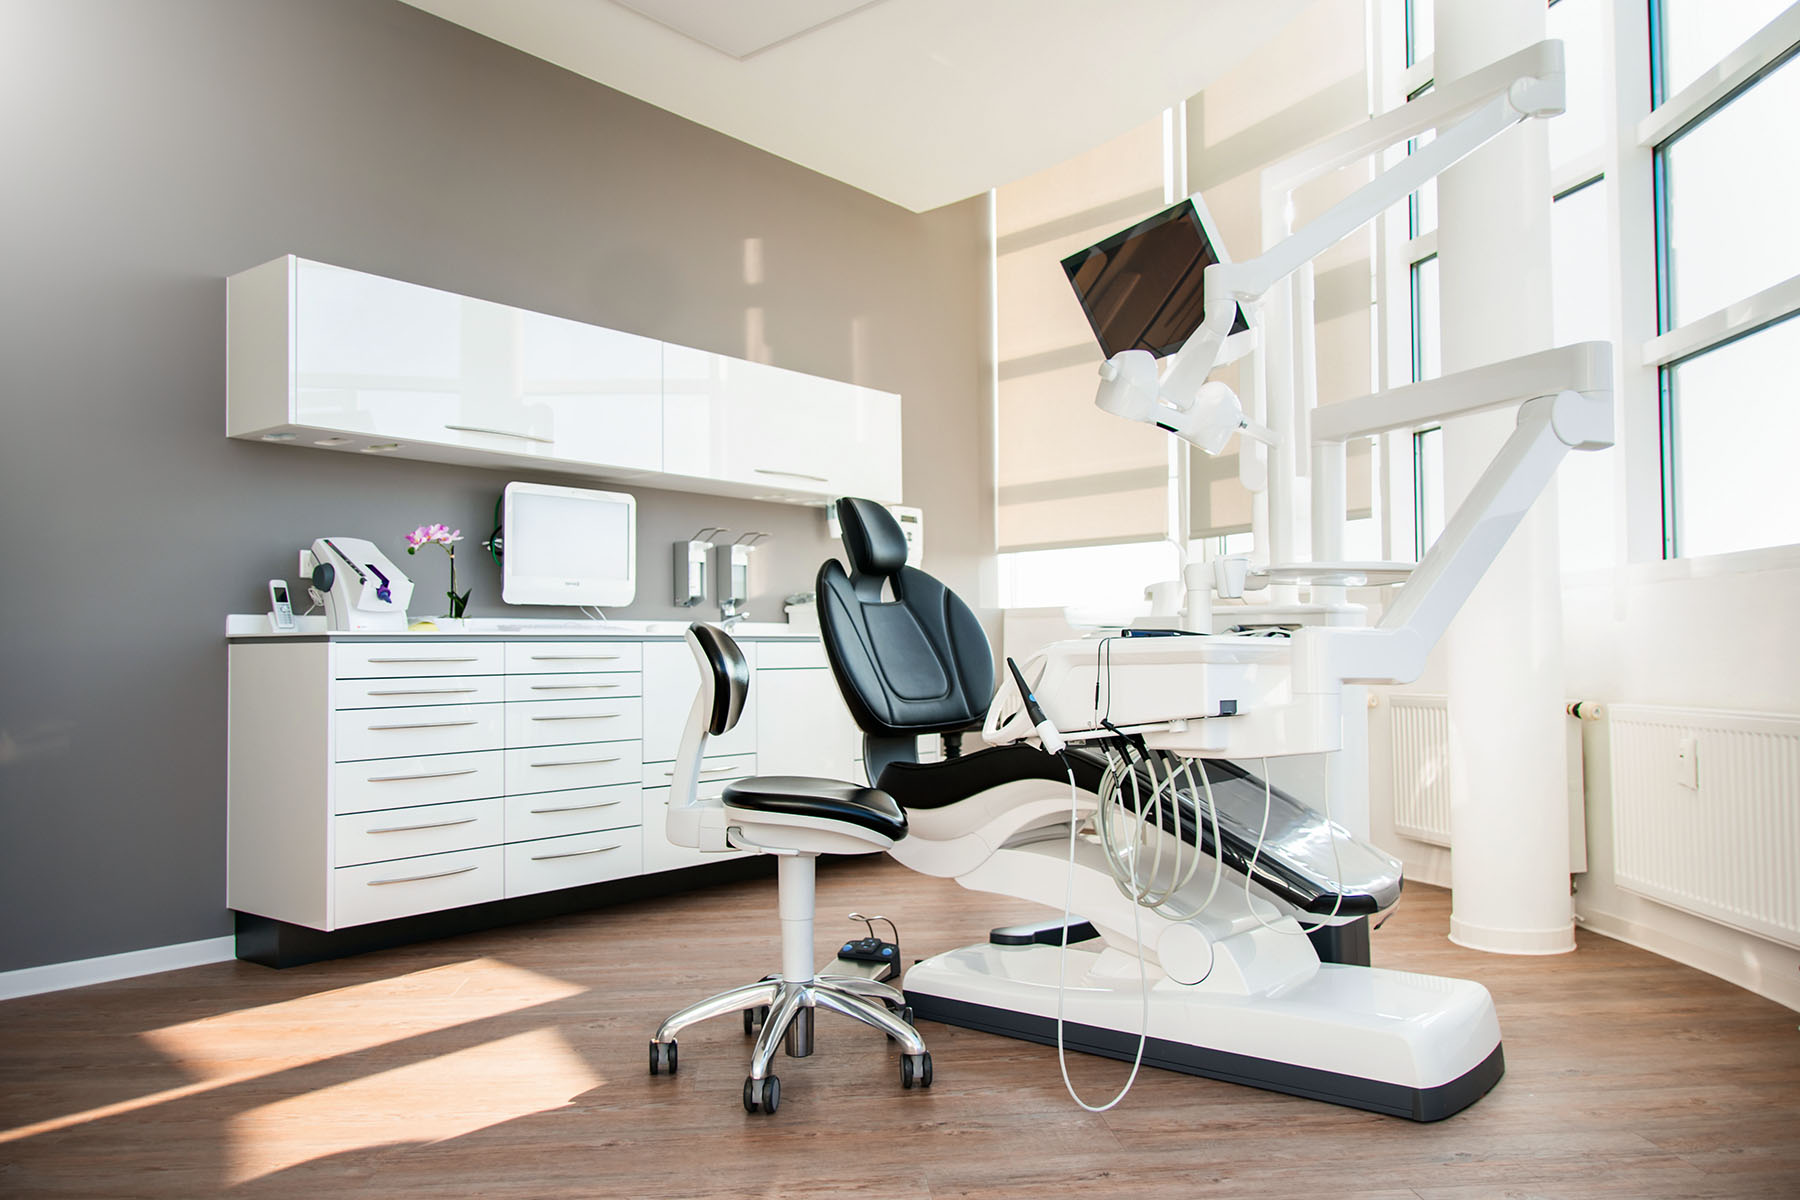 Behandlungszimmer einer Zahnarztpraxis, Behandlungseinheit, Zahnarztstuhl